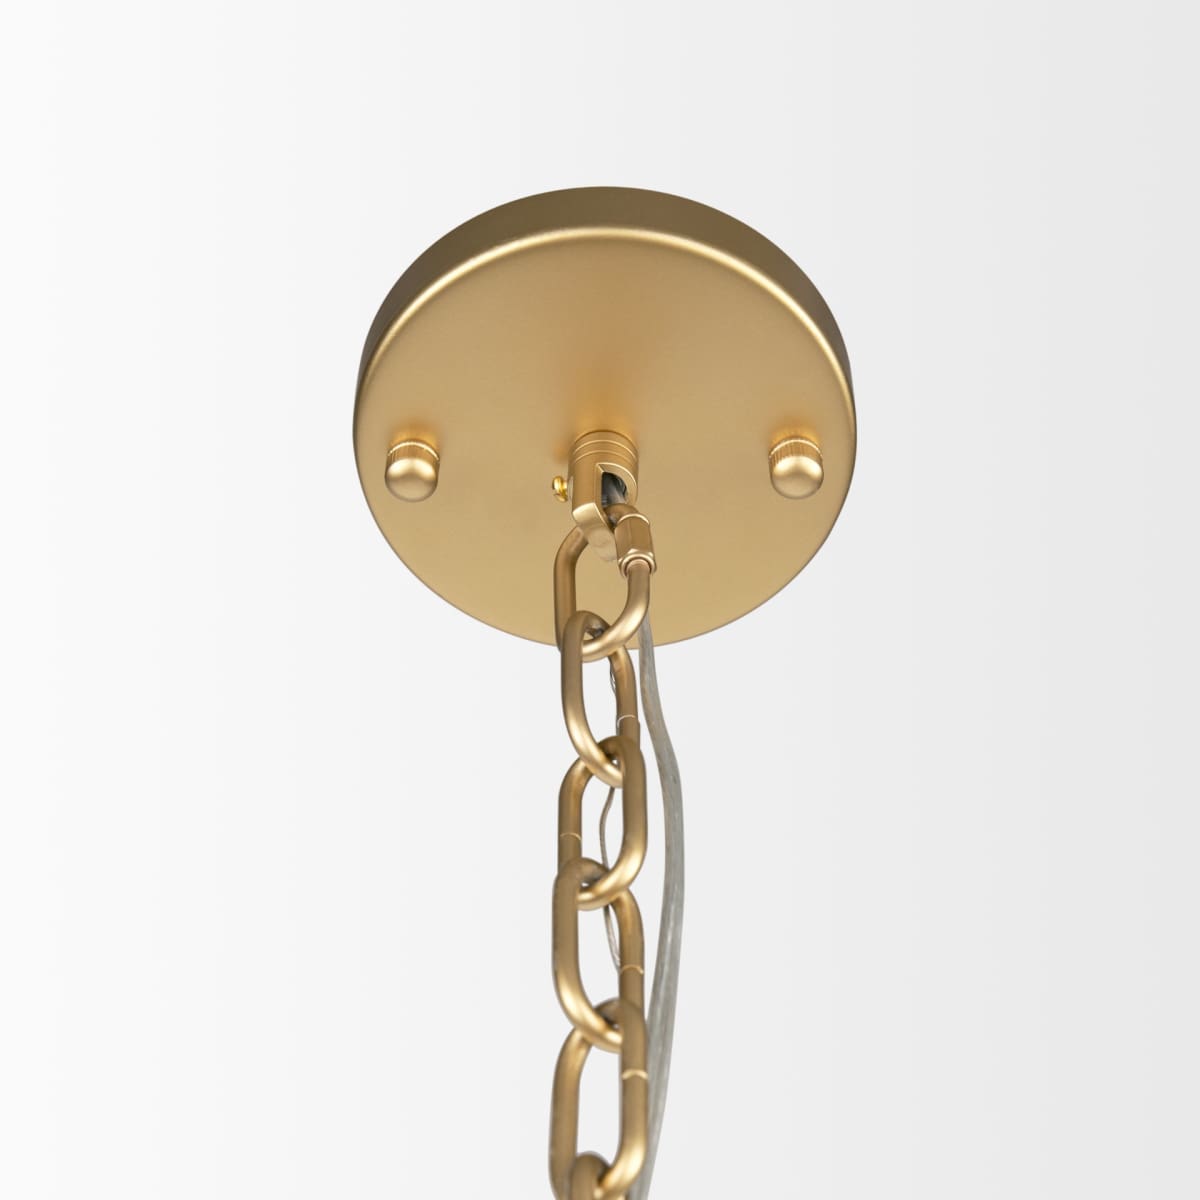 Monroe Chandelier Gold Metal | White Resin - chandeliers